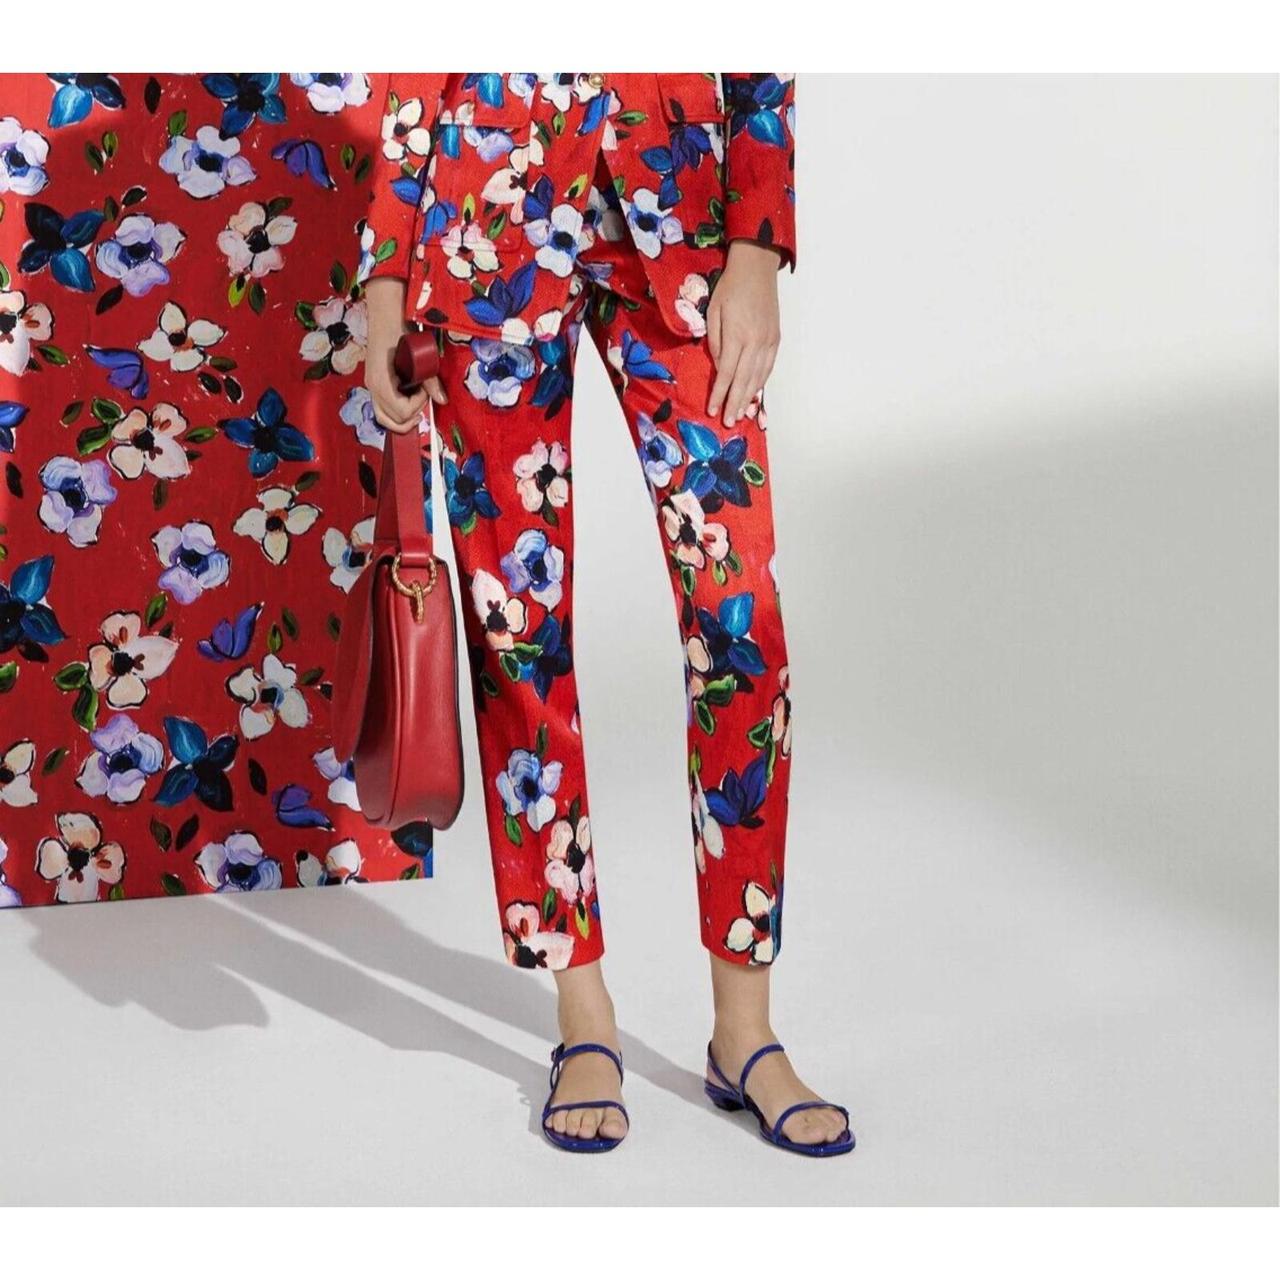 Escada Talaranto Pants in Medium Red Floral. These - Depop